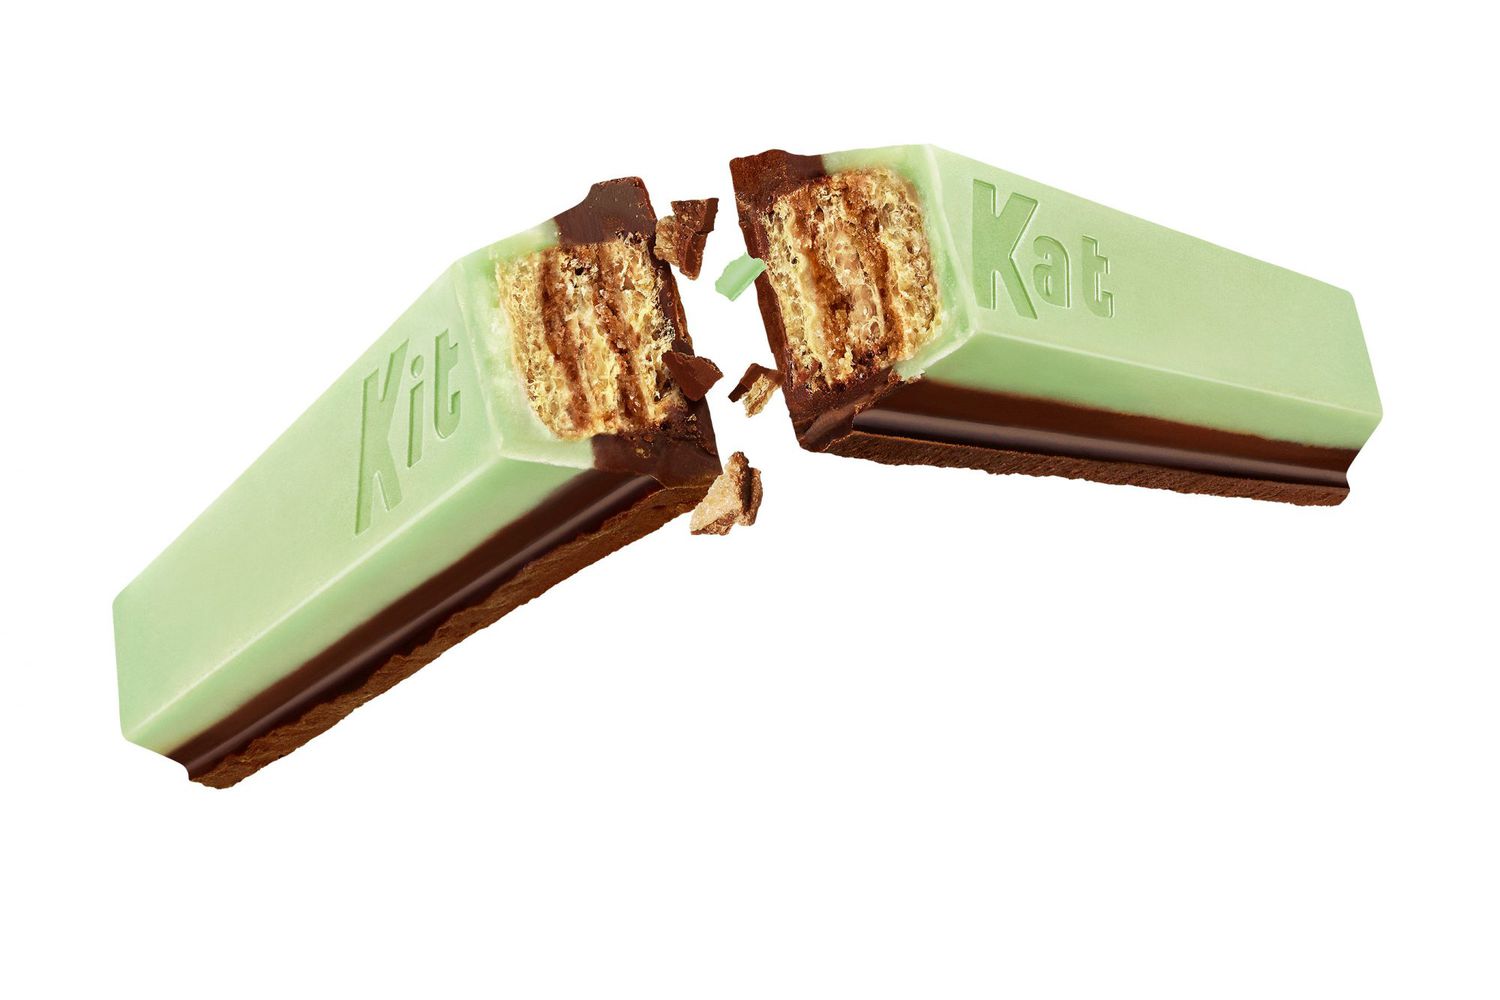 Kit Kat mint chocolate